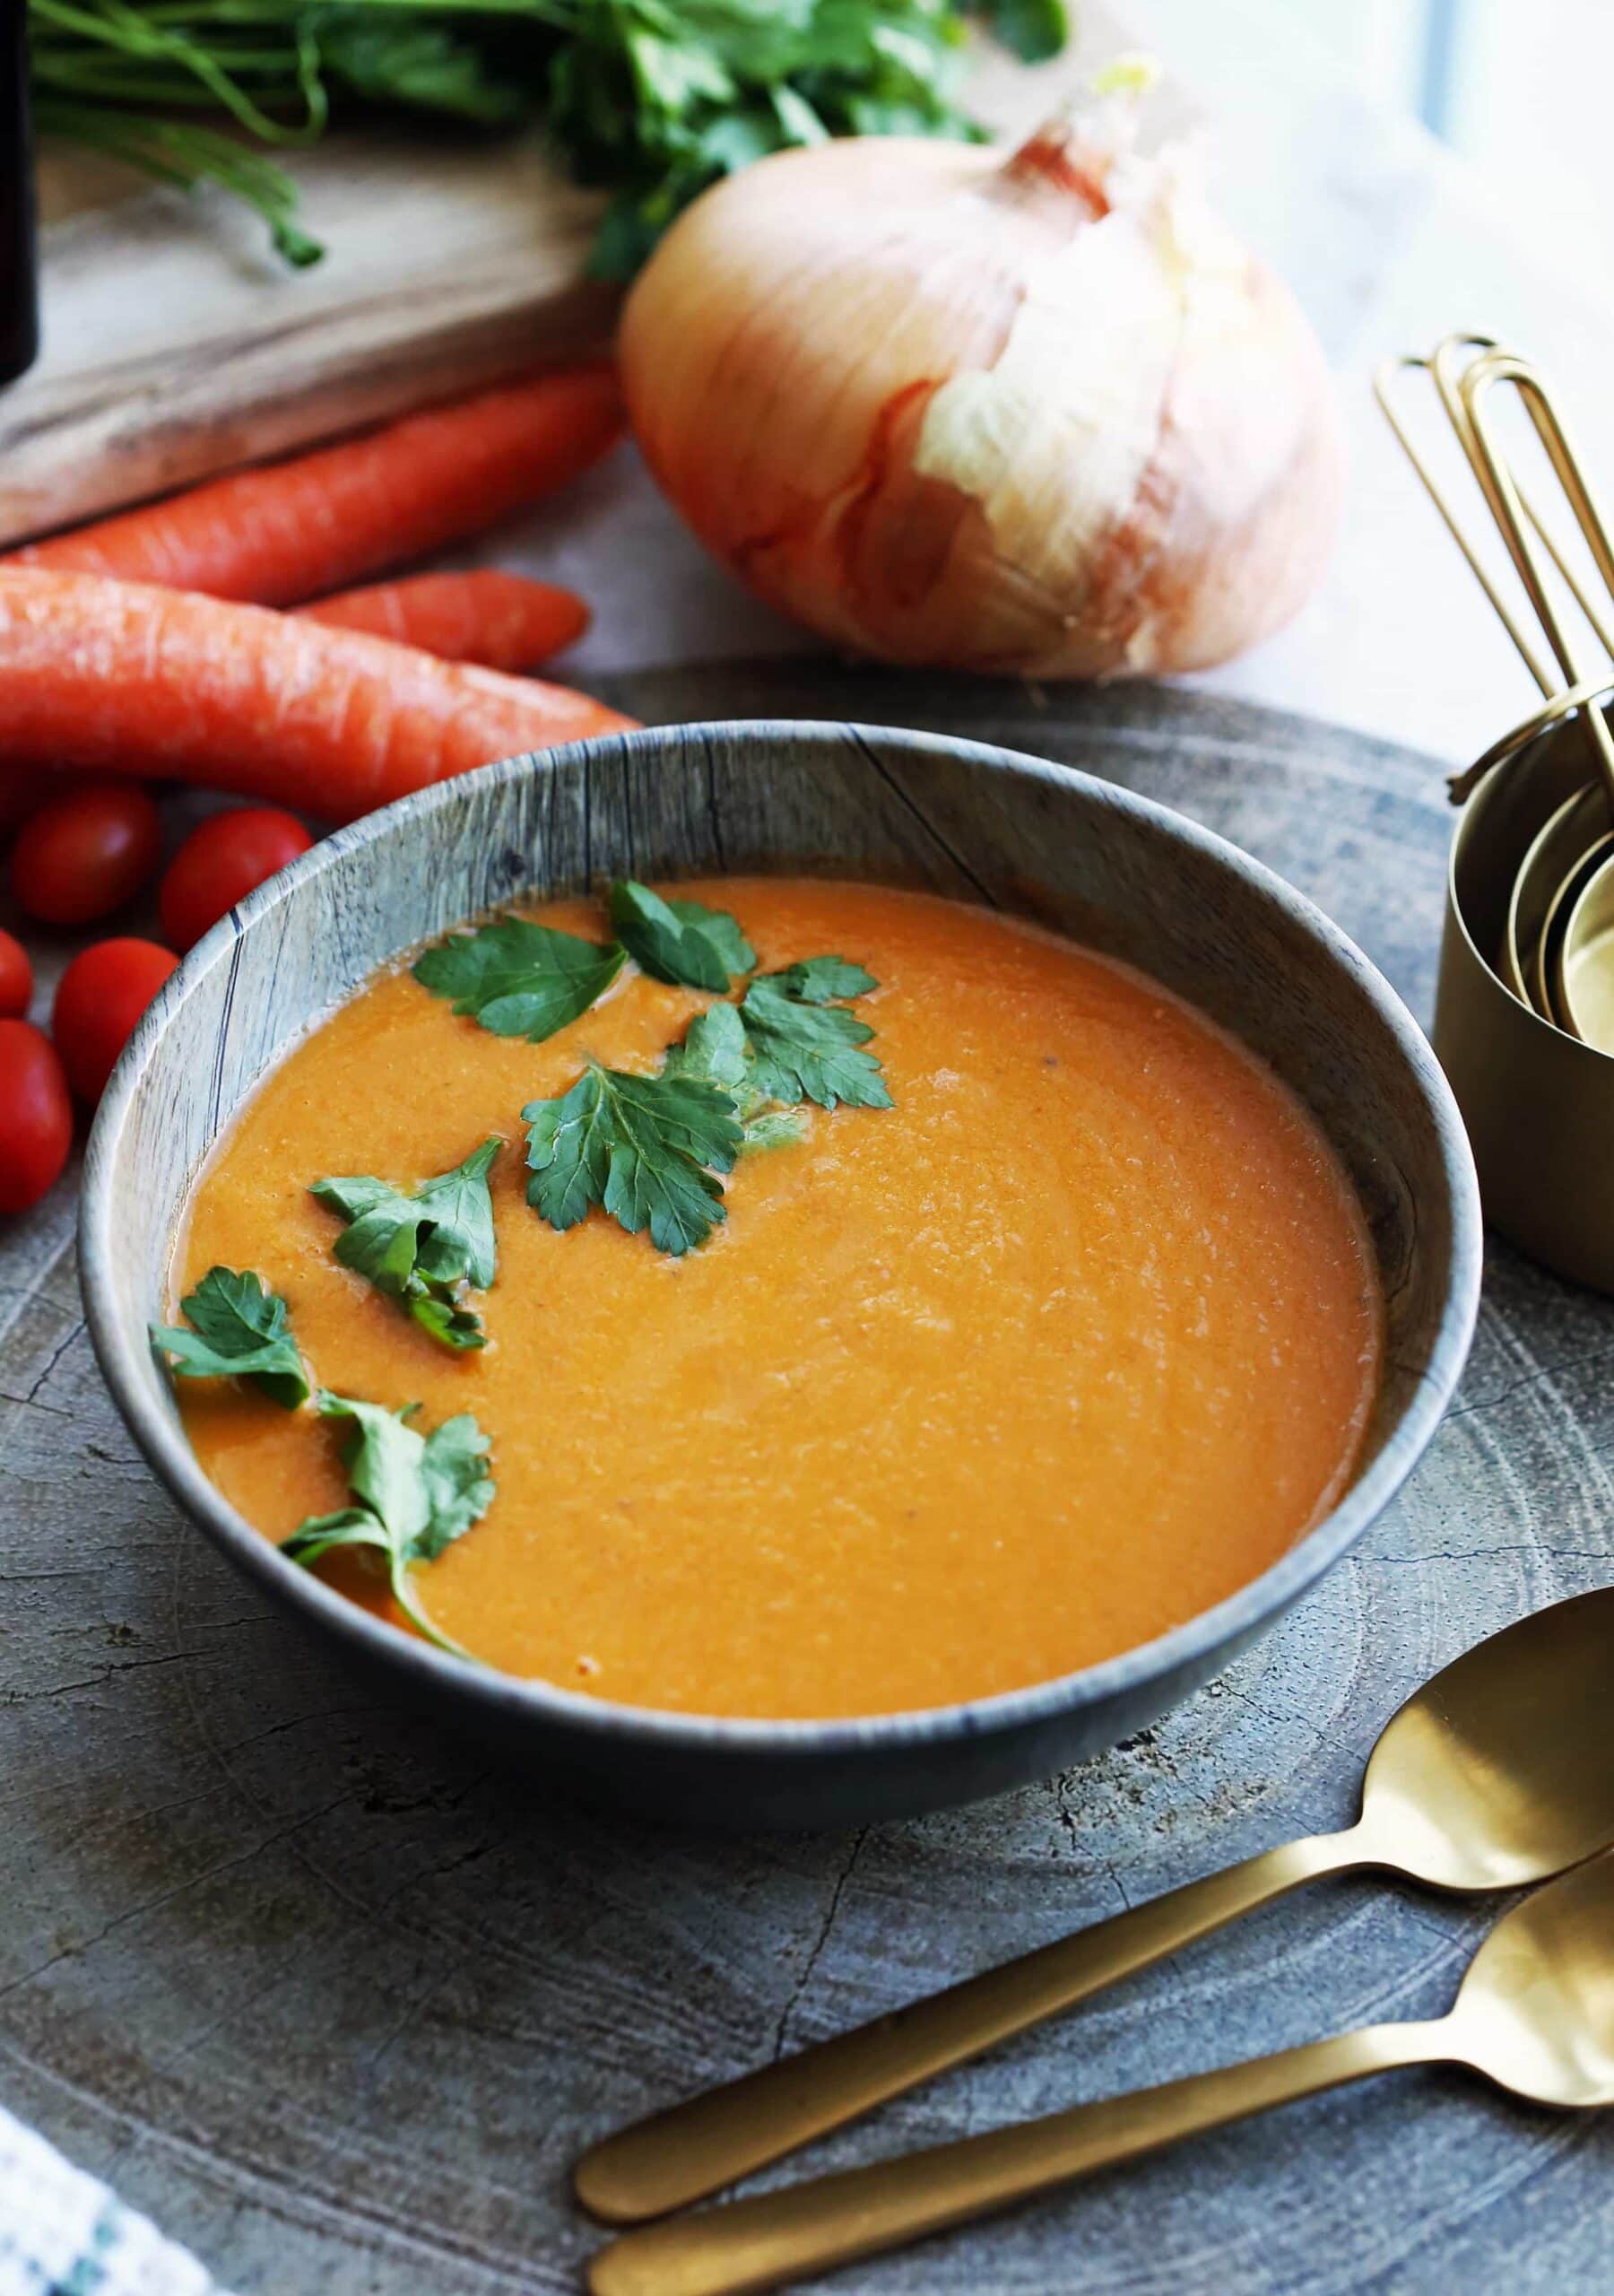 Instant Pot Homemade Tomato Soup